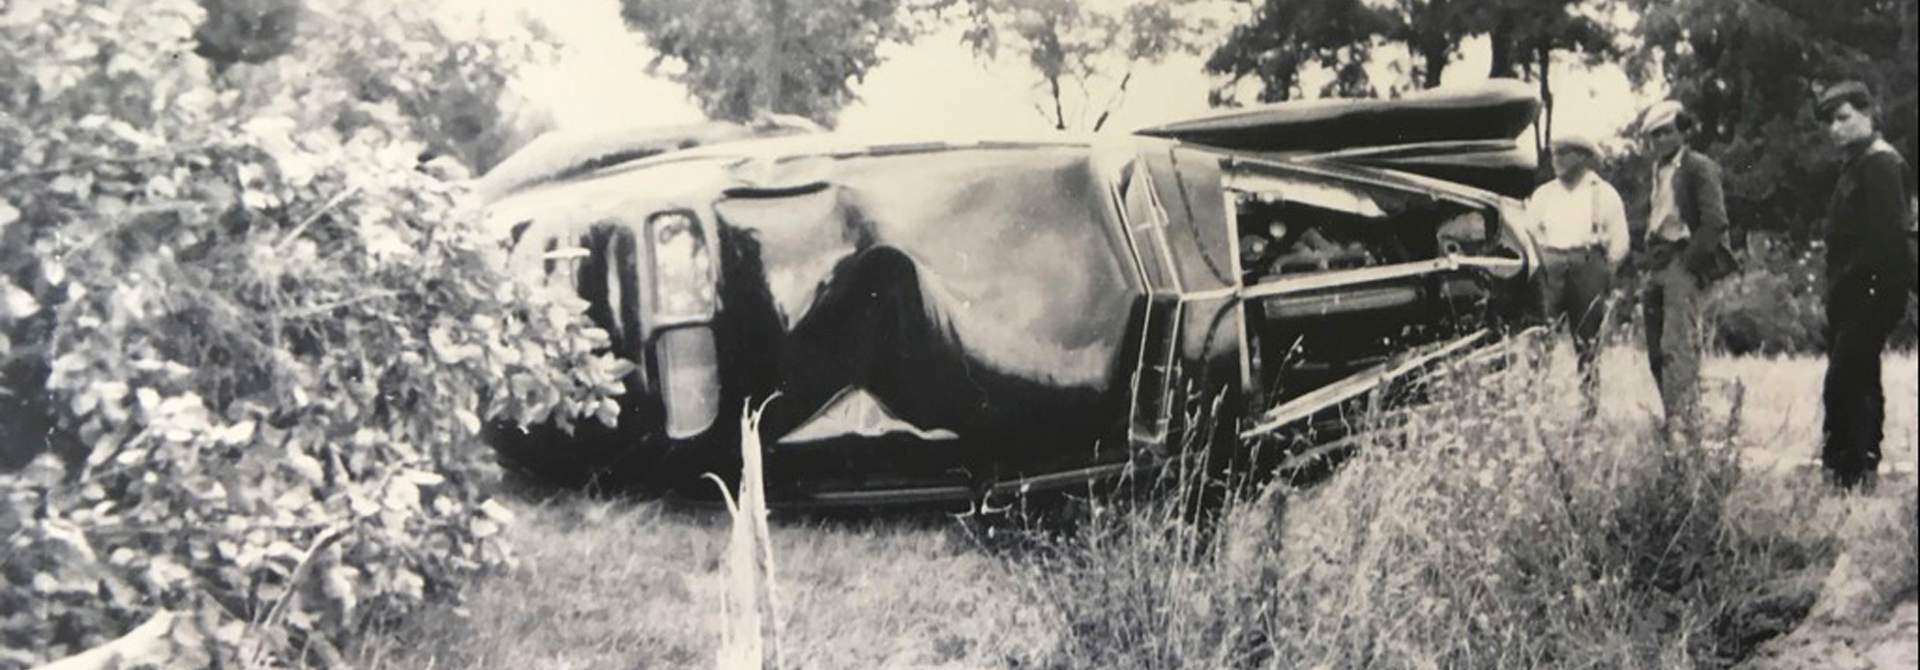 Crash image - original corniche car on its side 1920x670.jpg